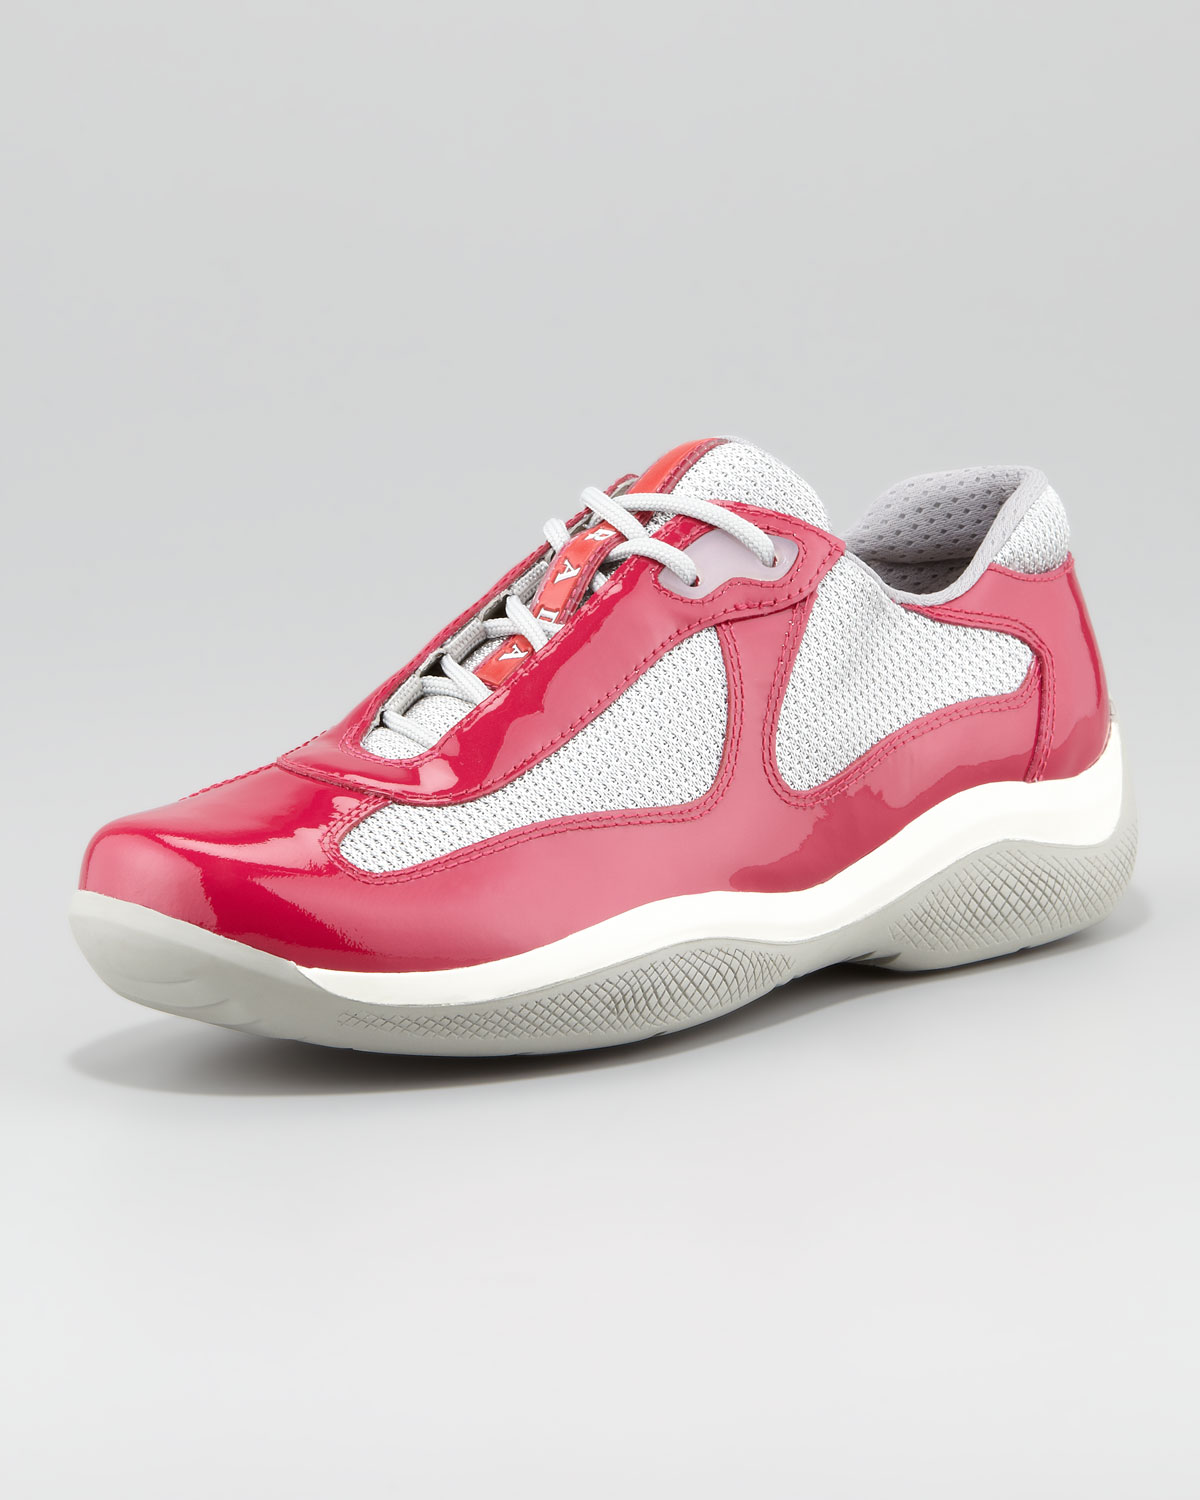 Prada Sport Sneaker in Pink/Silver (Pink) - Lyst